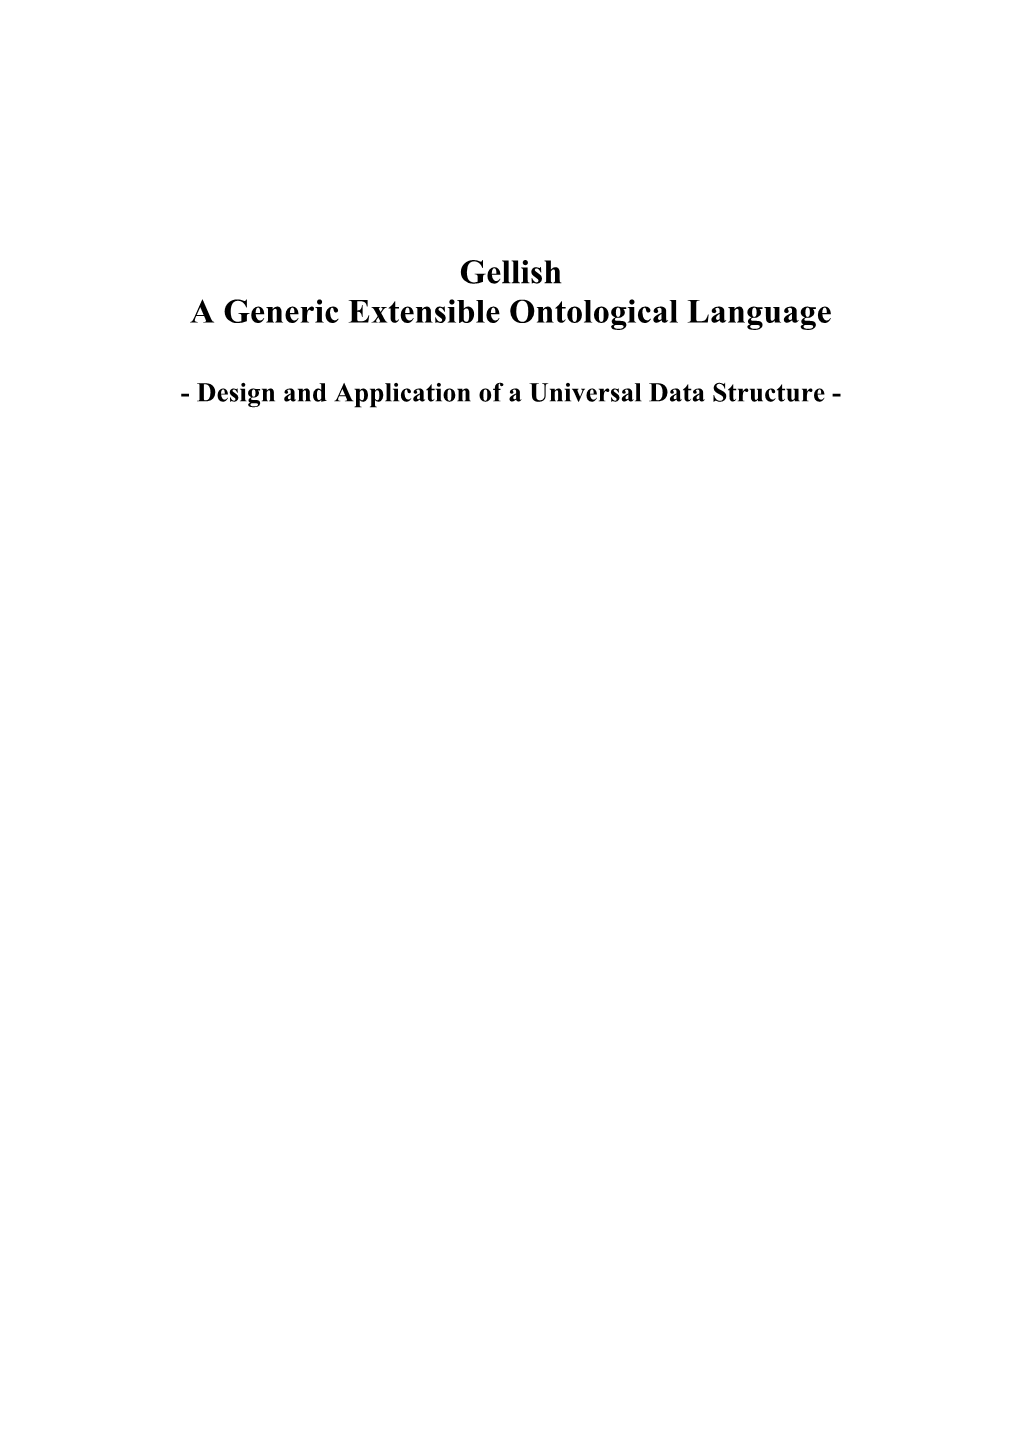 Gellish a Generic Extensible Ontological Language